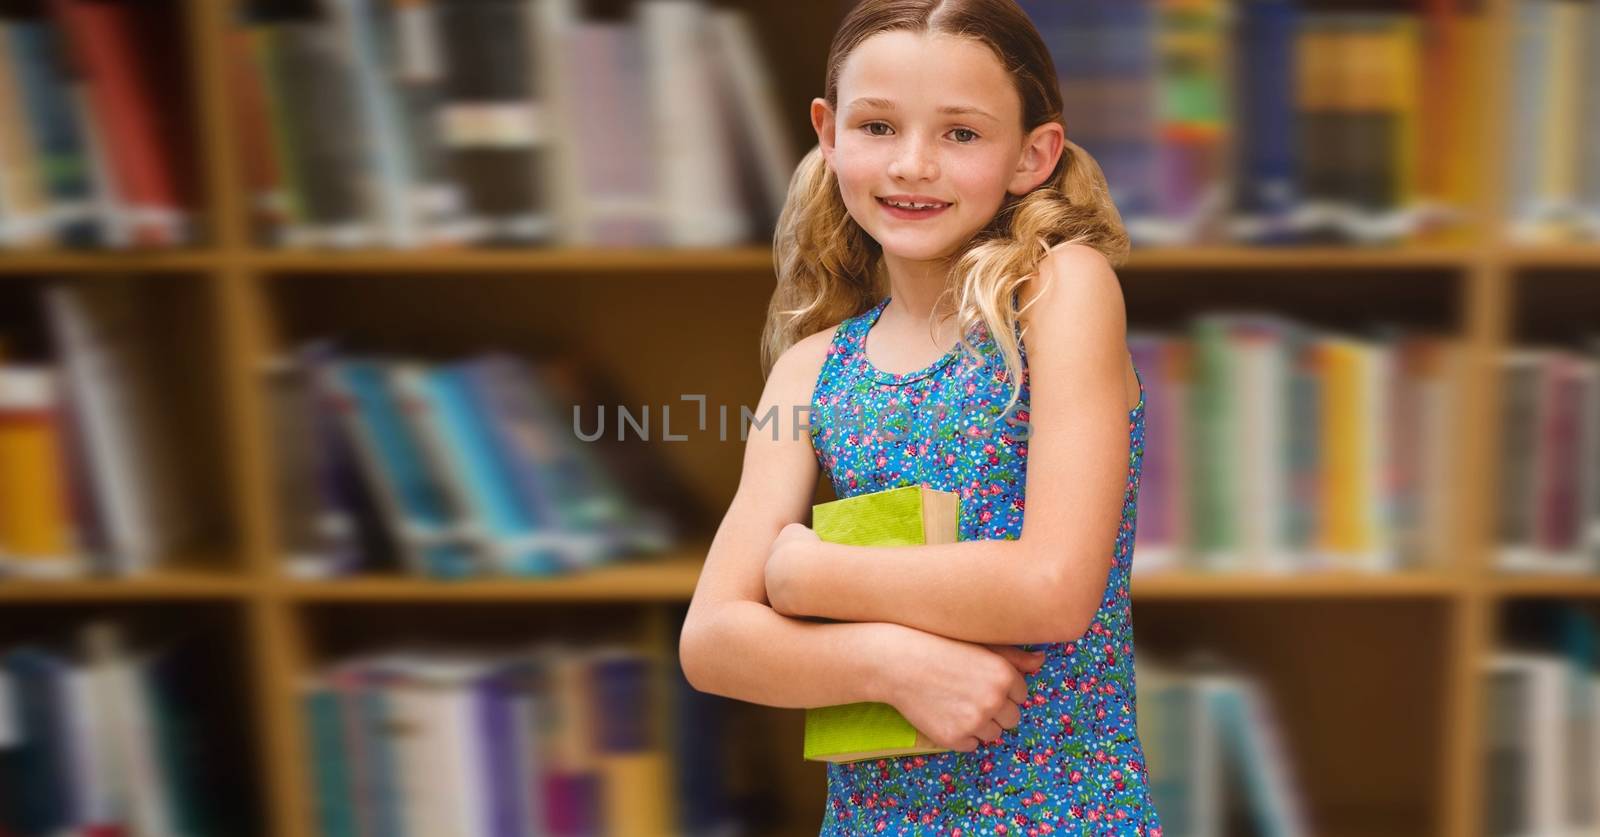 Girl in education library by Wavebreakmedia